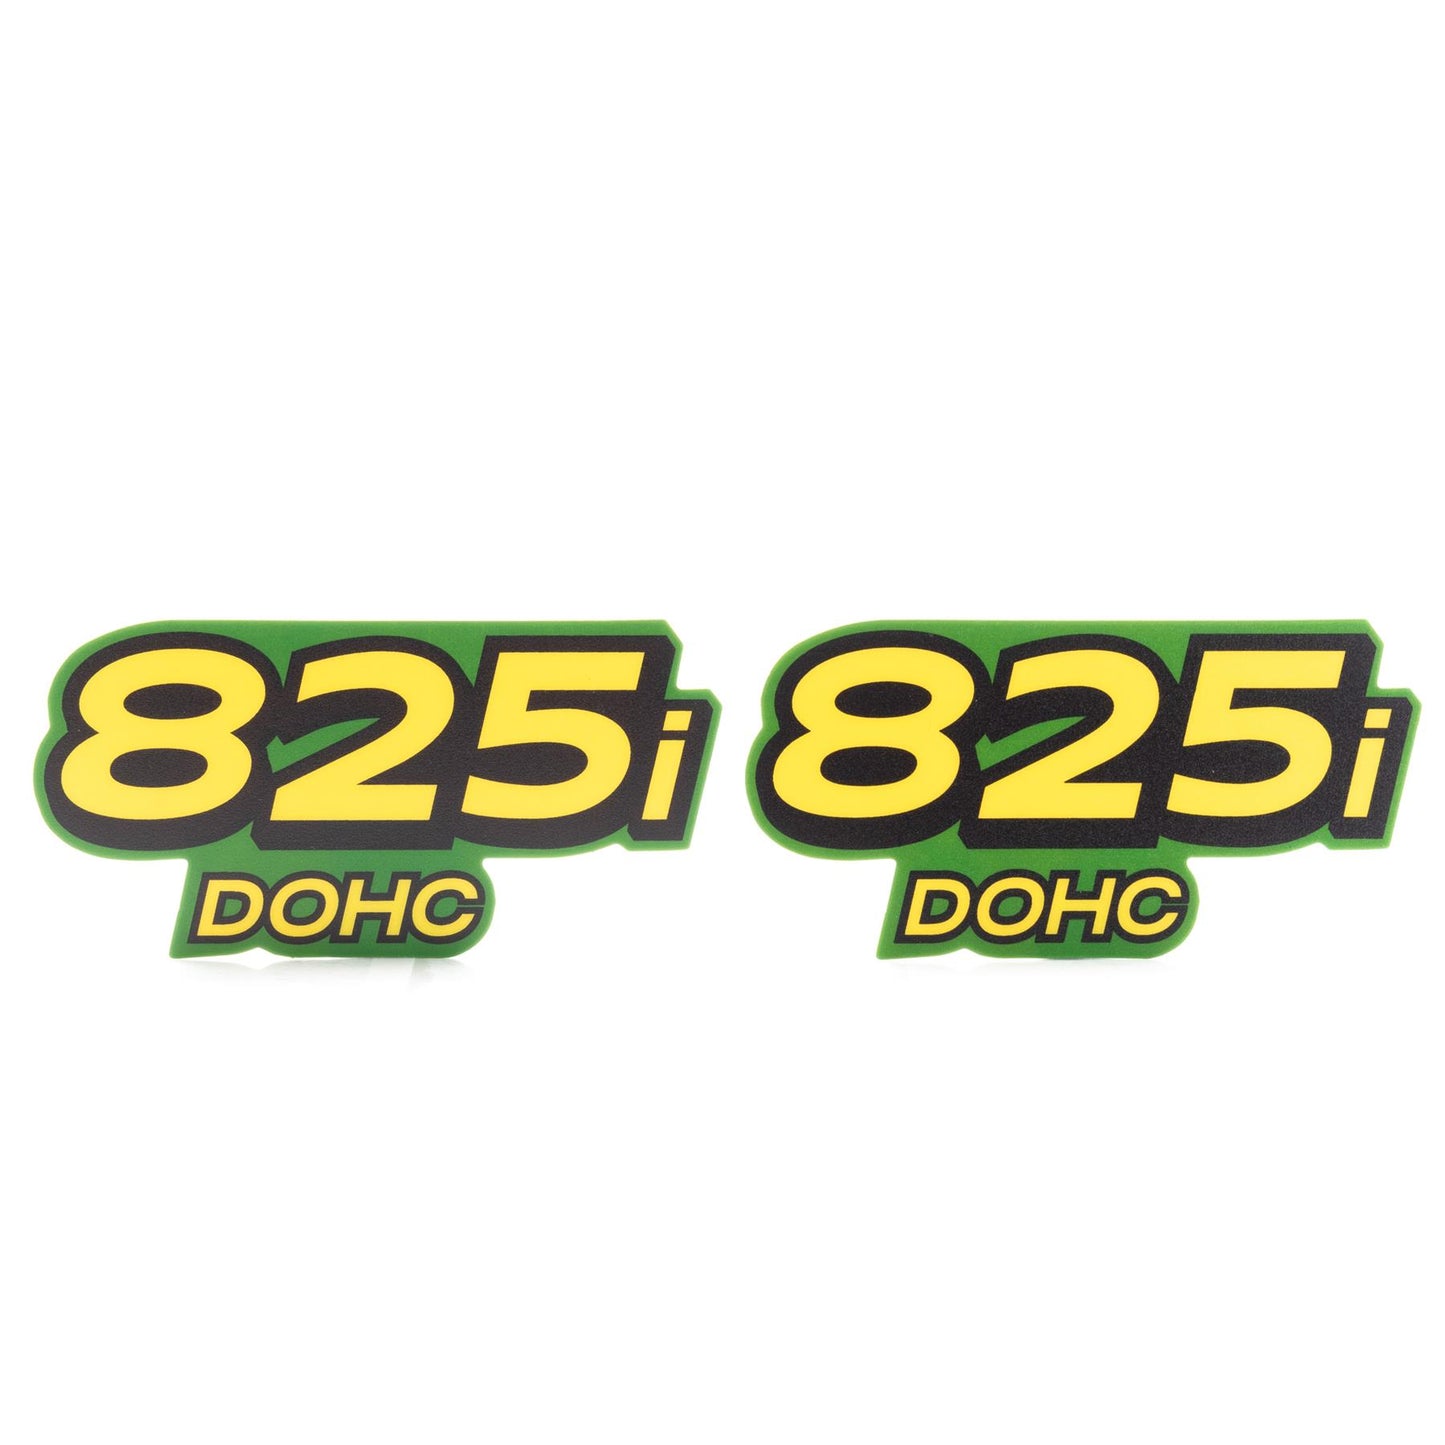 Decal - 825i DOHC - Set of 2